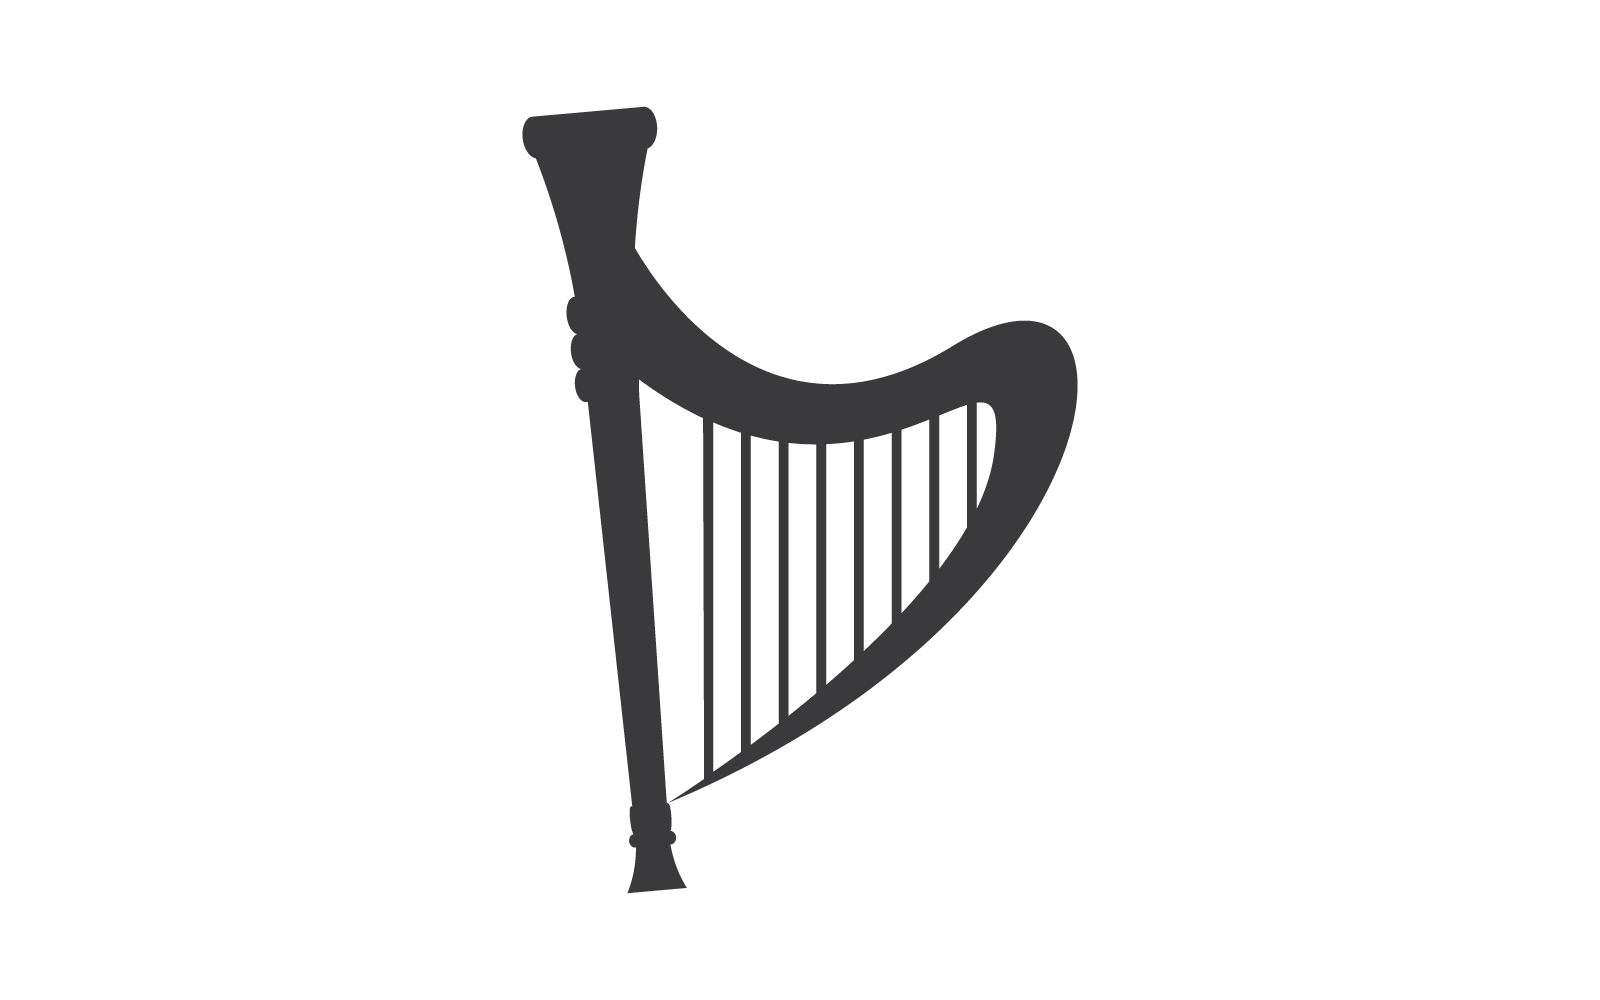 Harp illustration logo vector design template